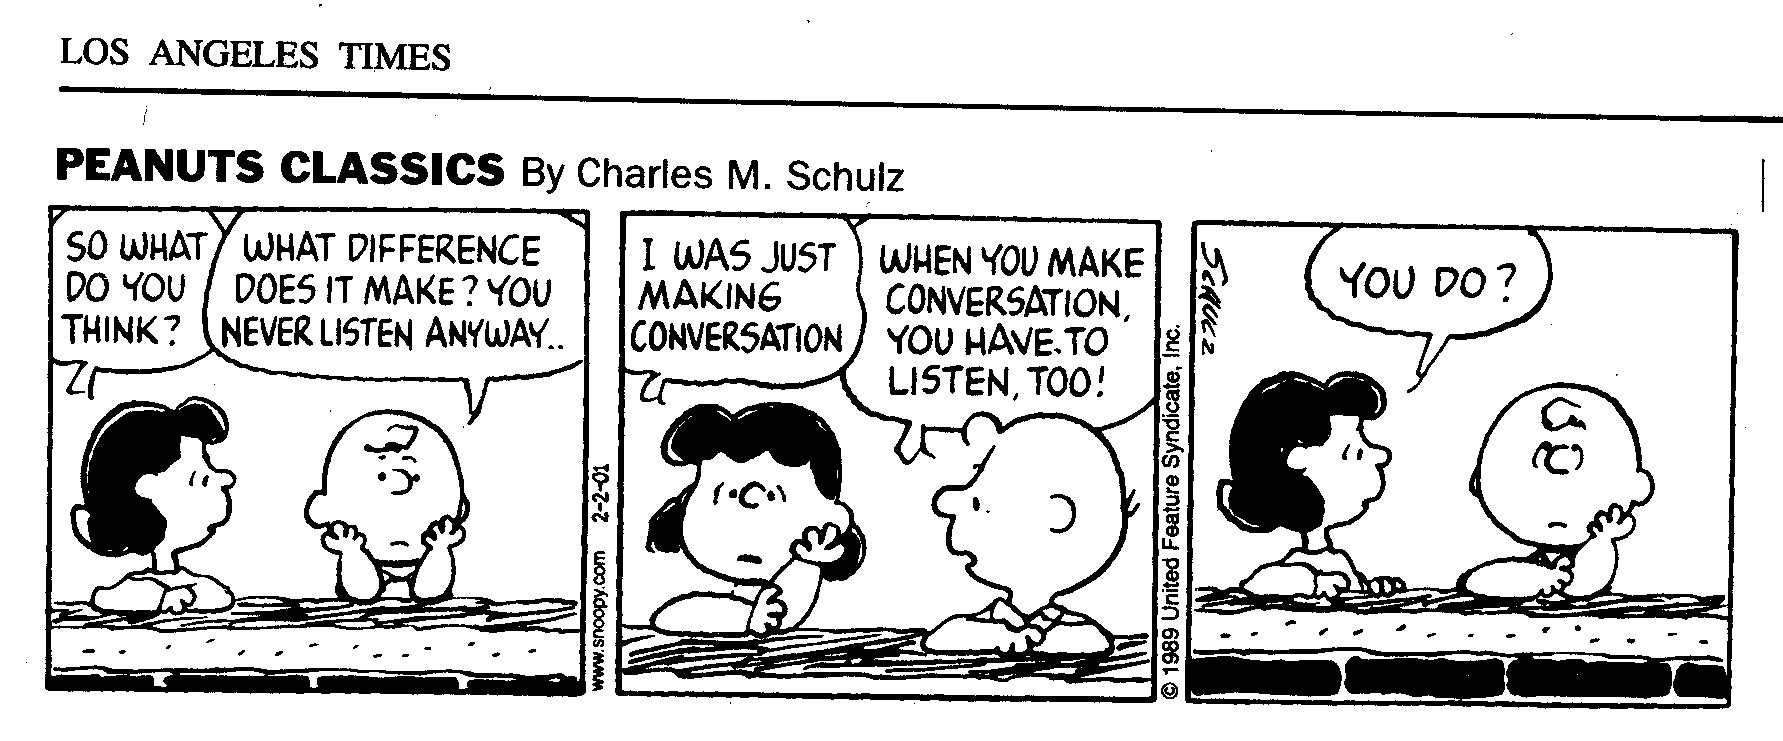 Peanuts Cartoon About Listening